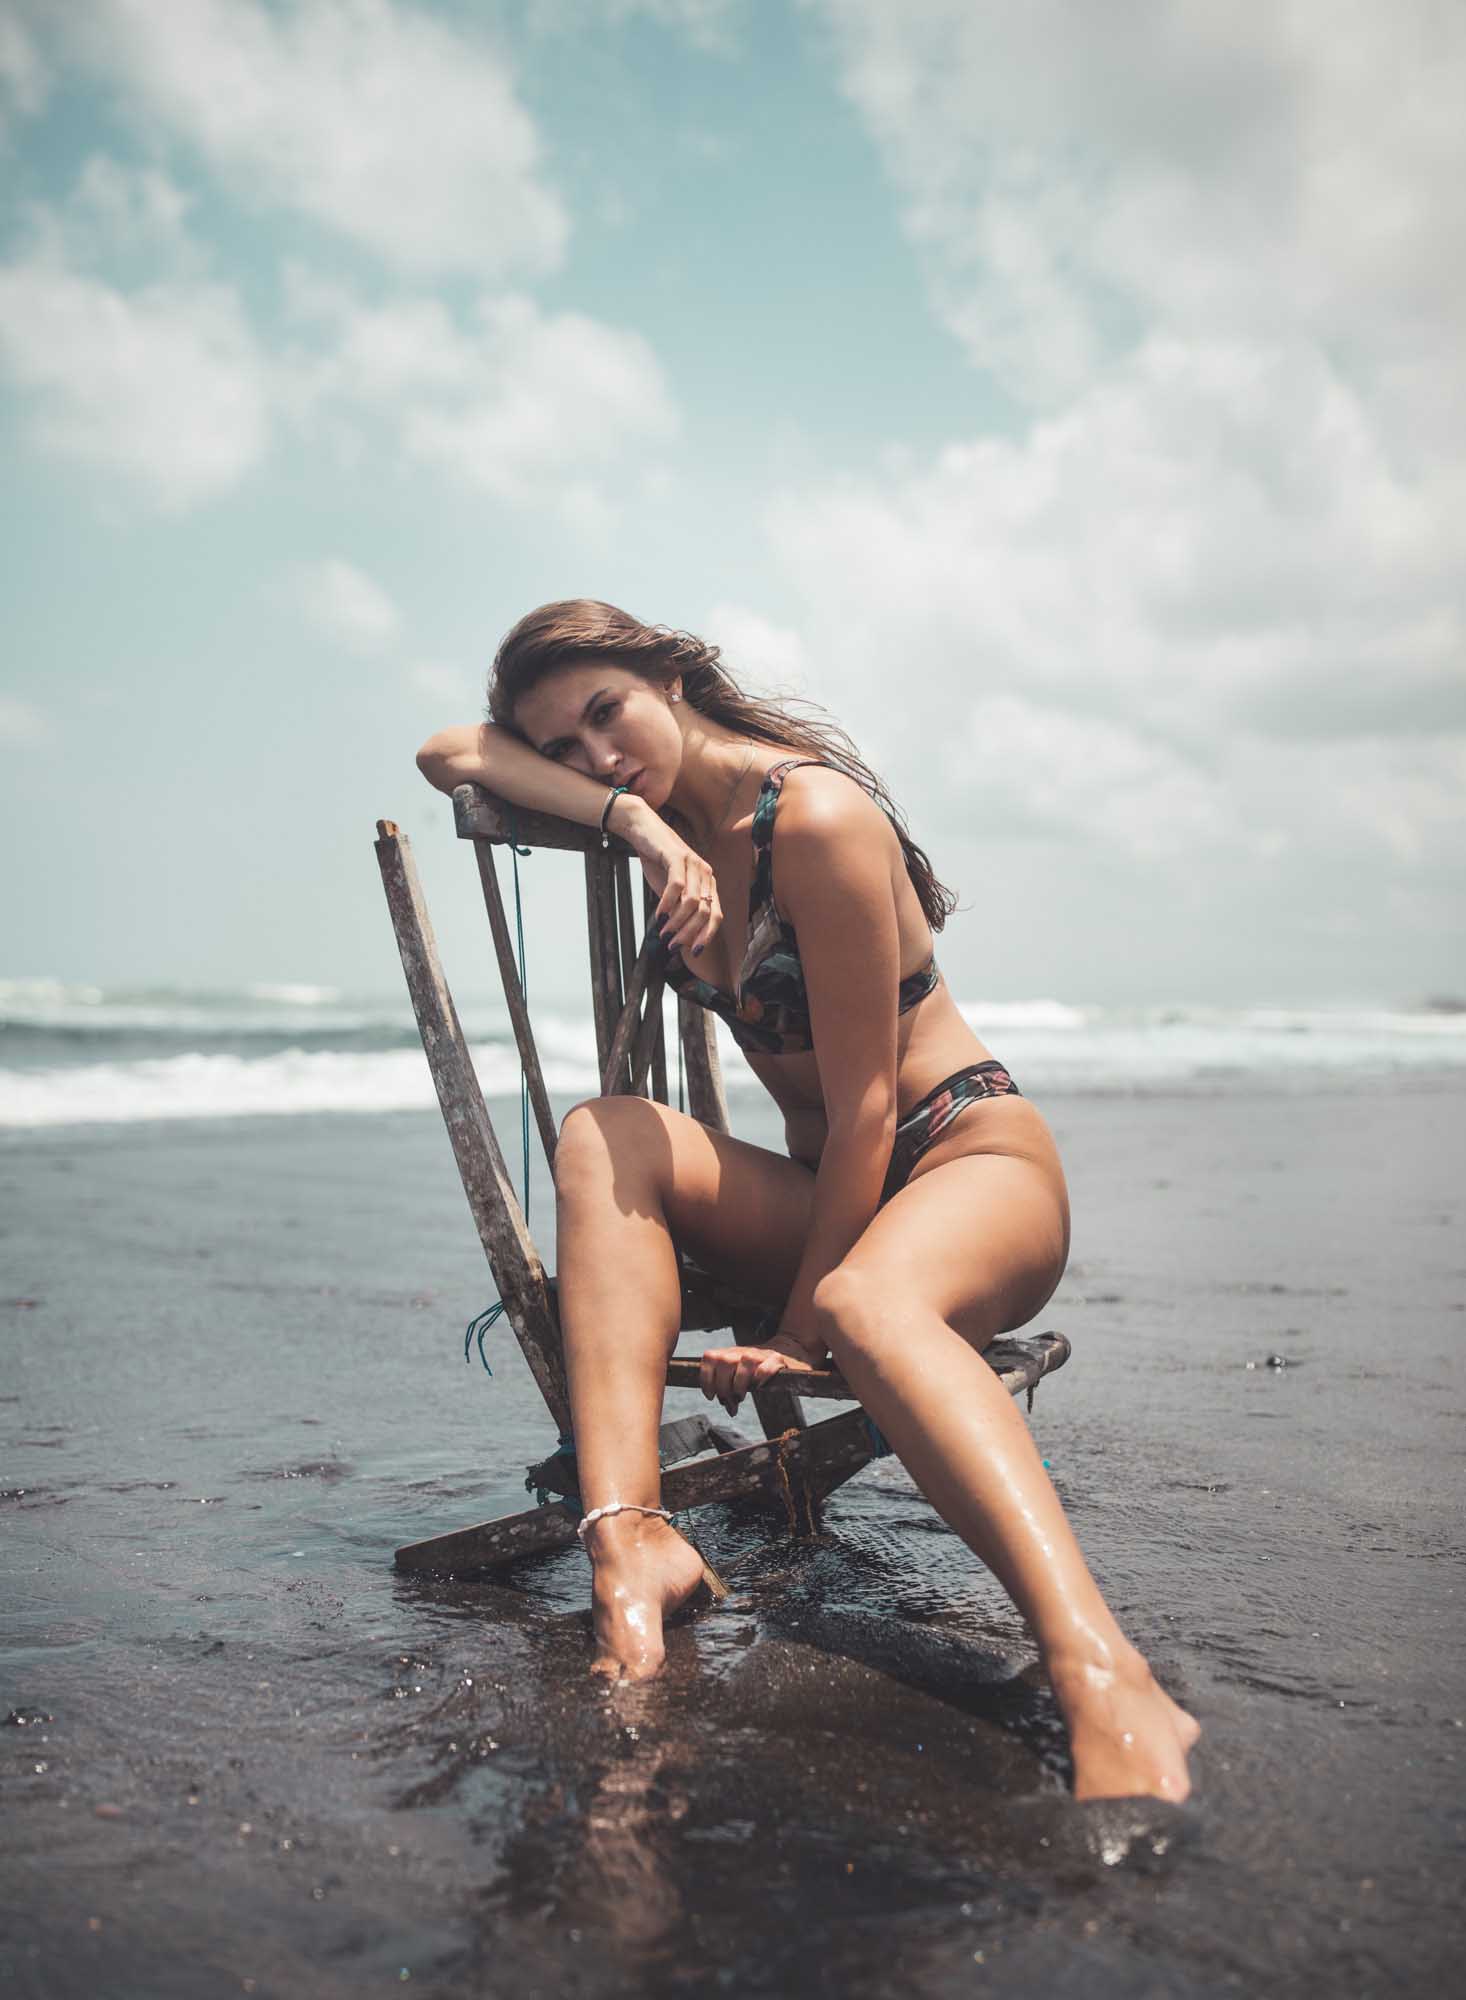 Beautiful woman in bikini models on an abandoned chair on the beach | Fashion Photography | Portrait | Lifestyle Photography | Pantai Mangening,Bali, Indonesia | Swimwear | Sexy | Hot | Denver Photographer |